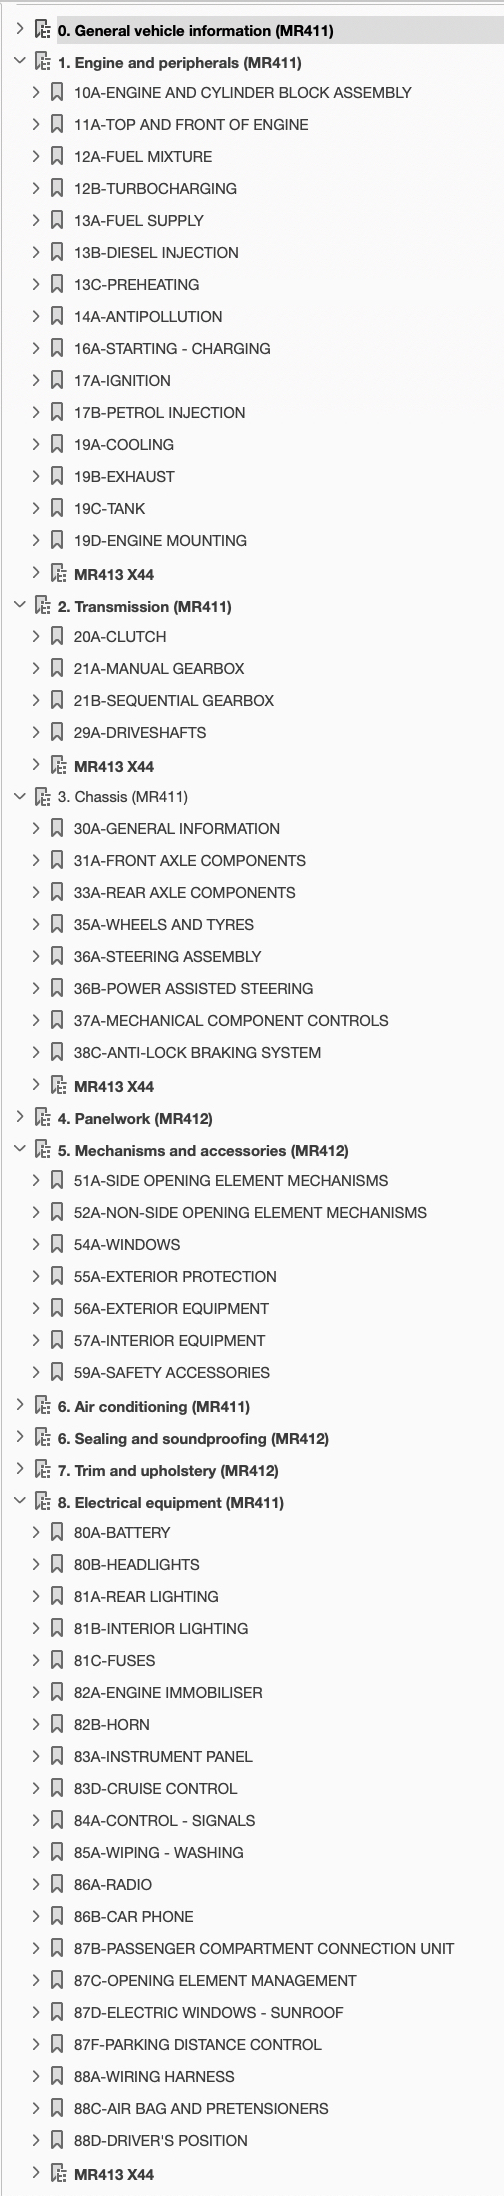 Table of Contents 2008-2009 Renault Twingo Repair Manual